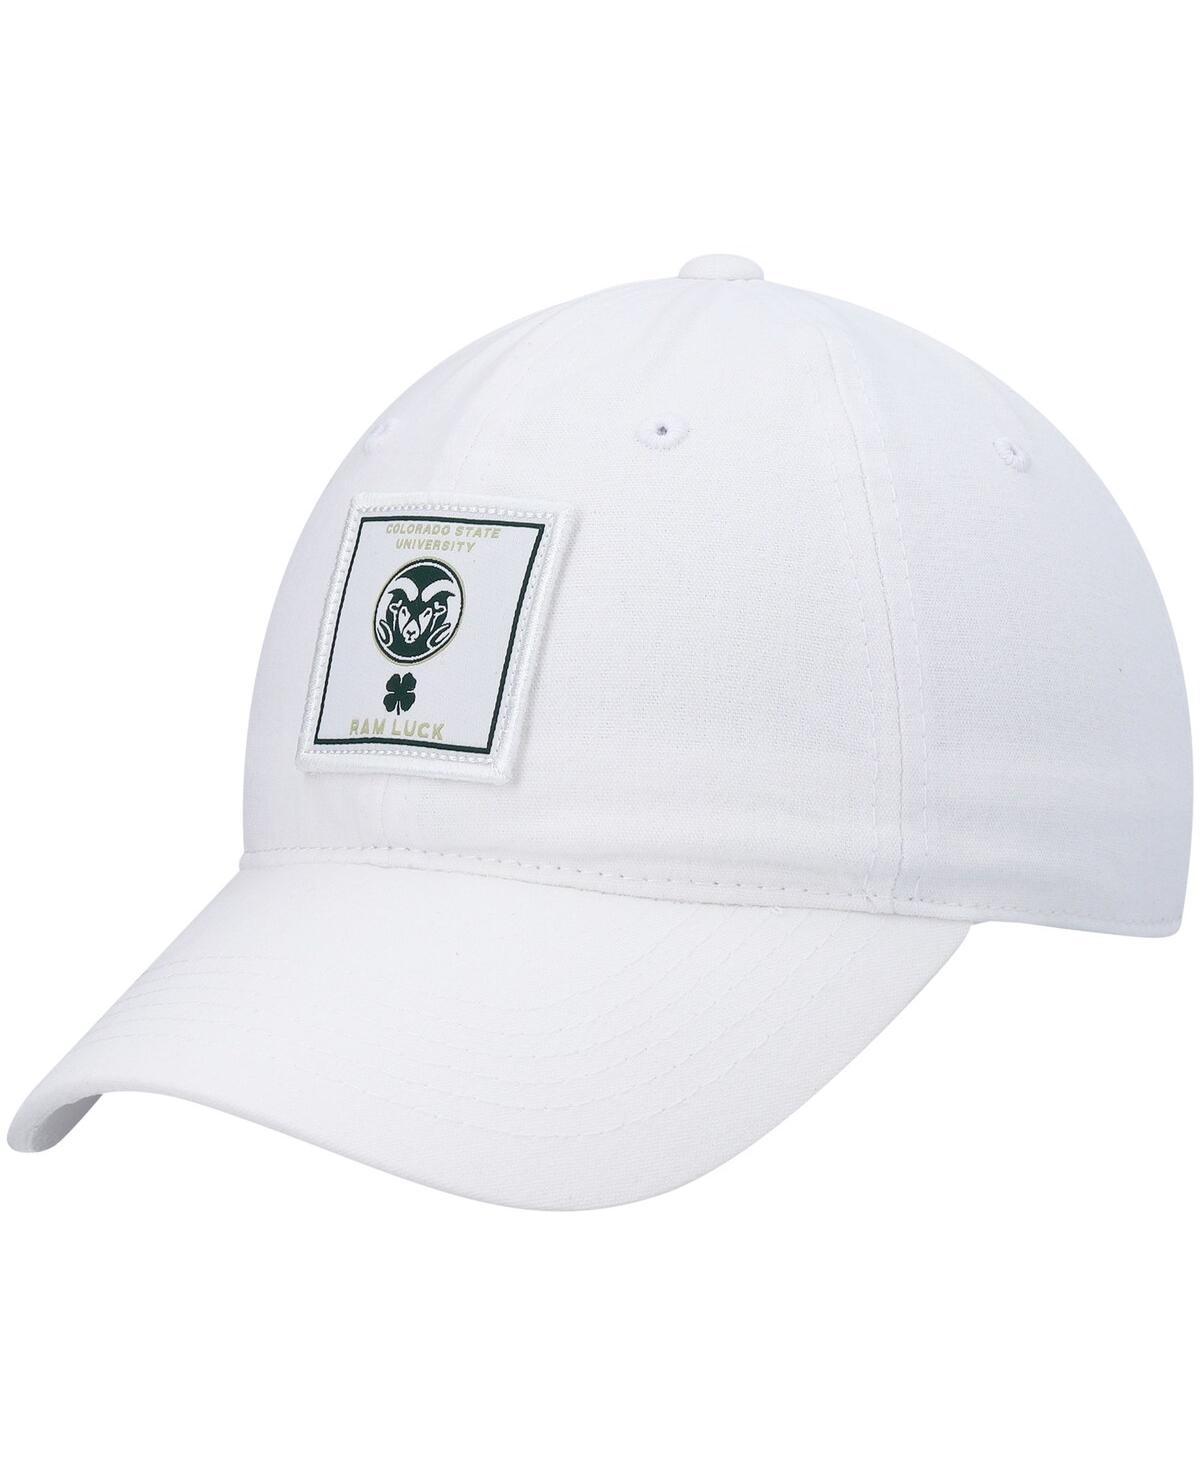 Men's White Colorado State Rams Dream Adjustable Hat - White